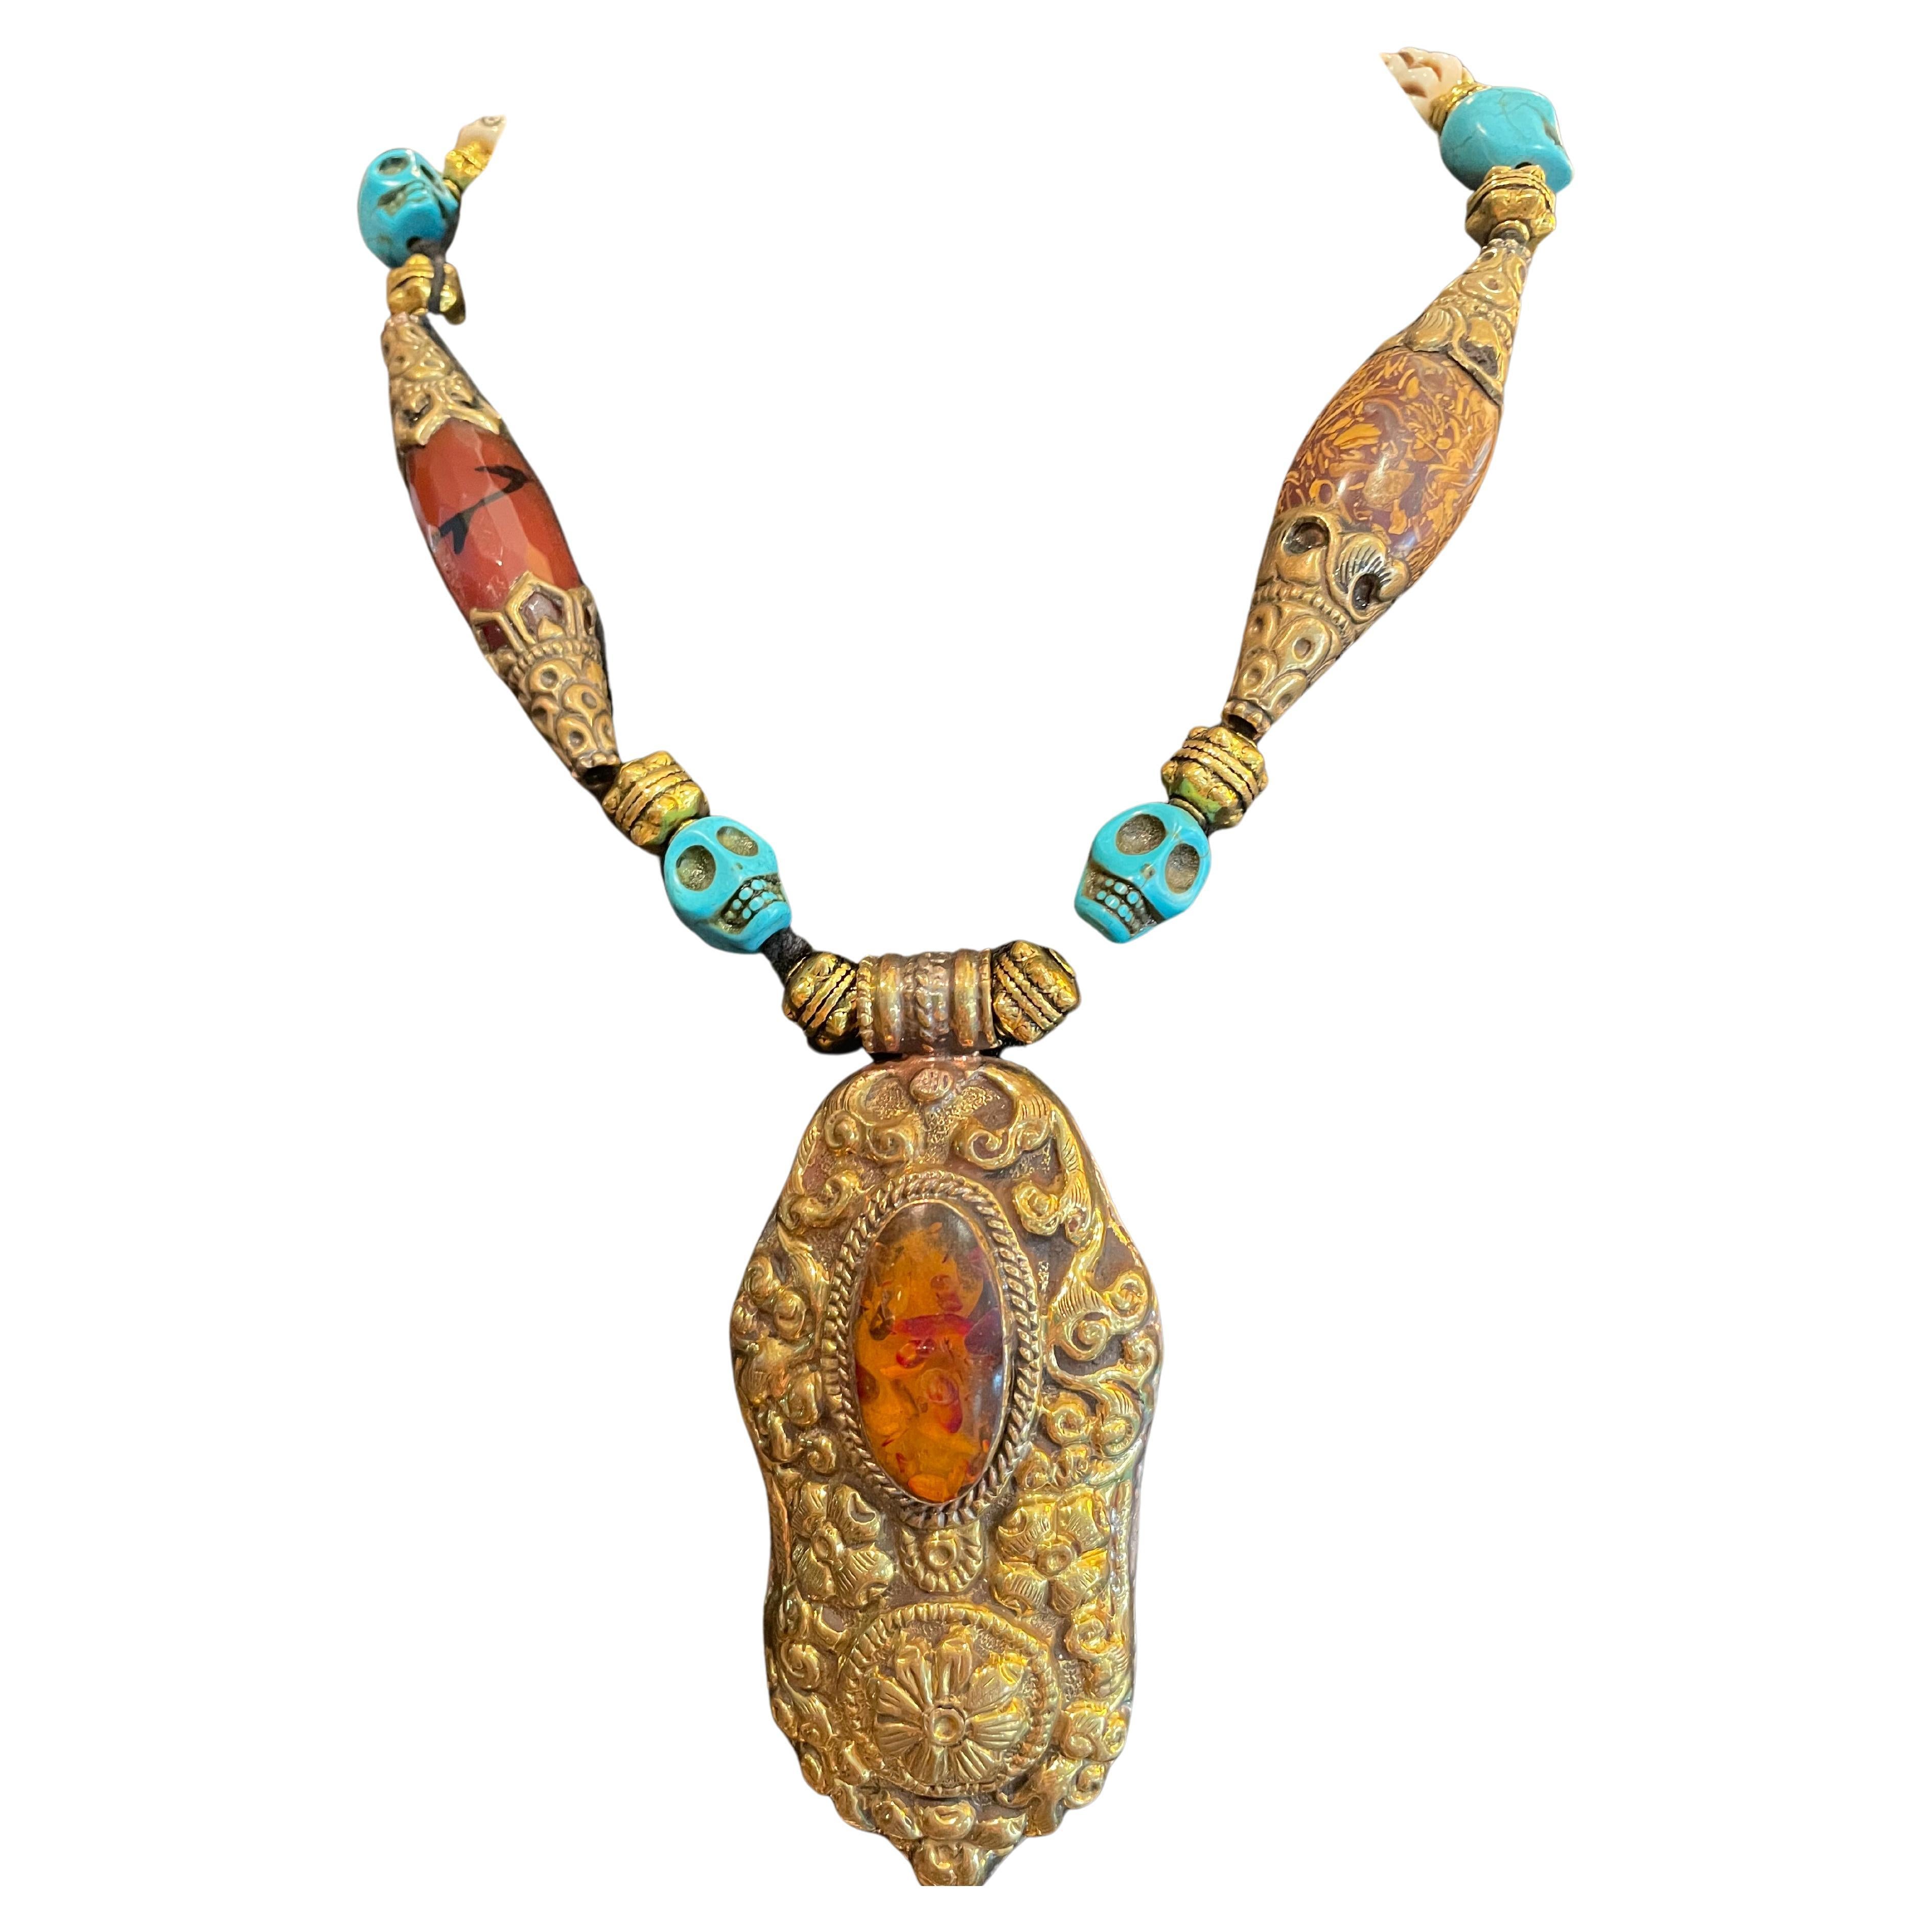 LB Tibetan pendant Turquoise vintage Indian agate bone discs necklace on offer For Sale